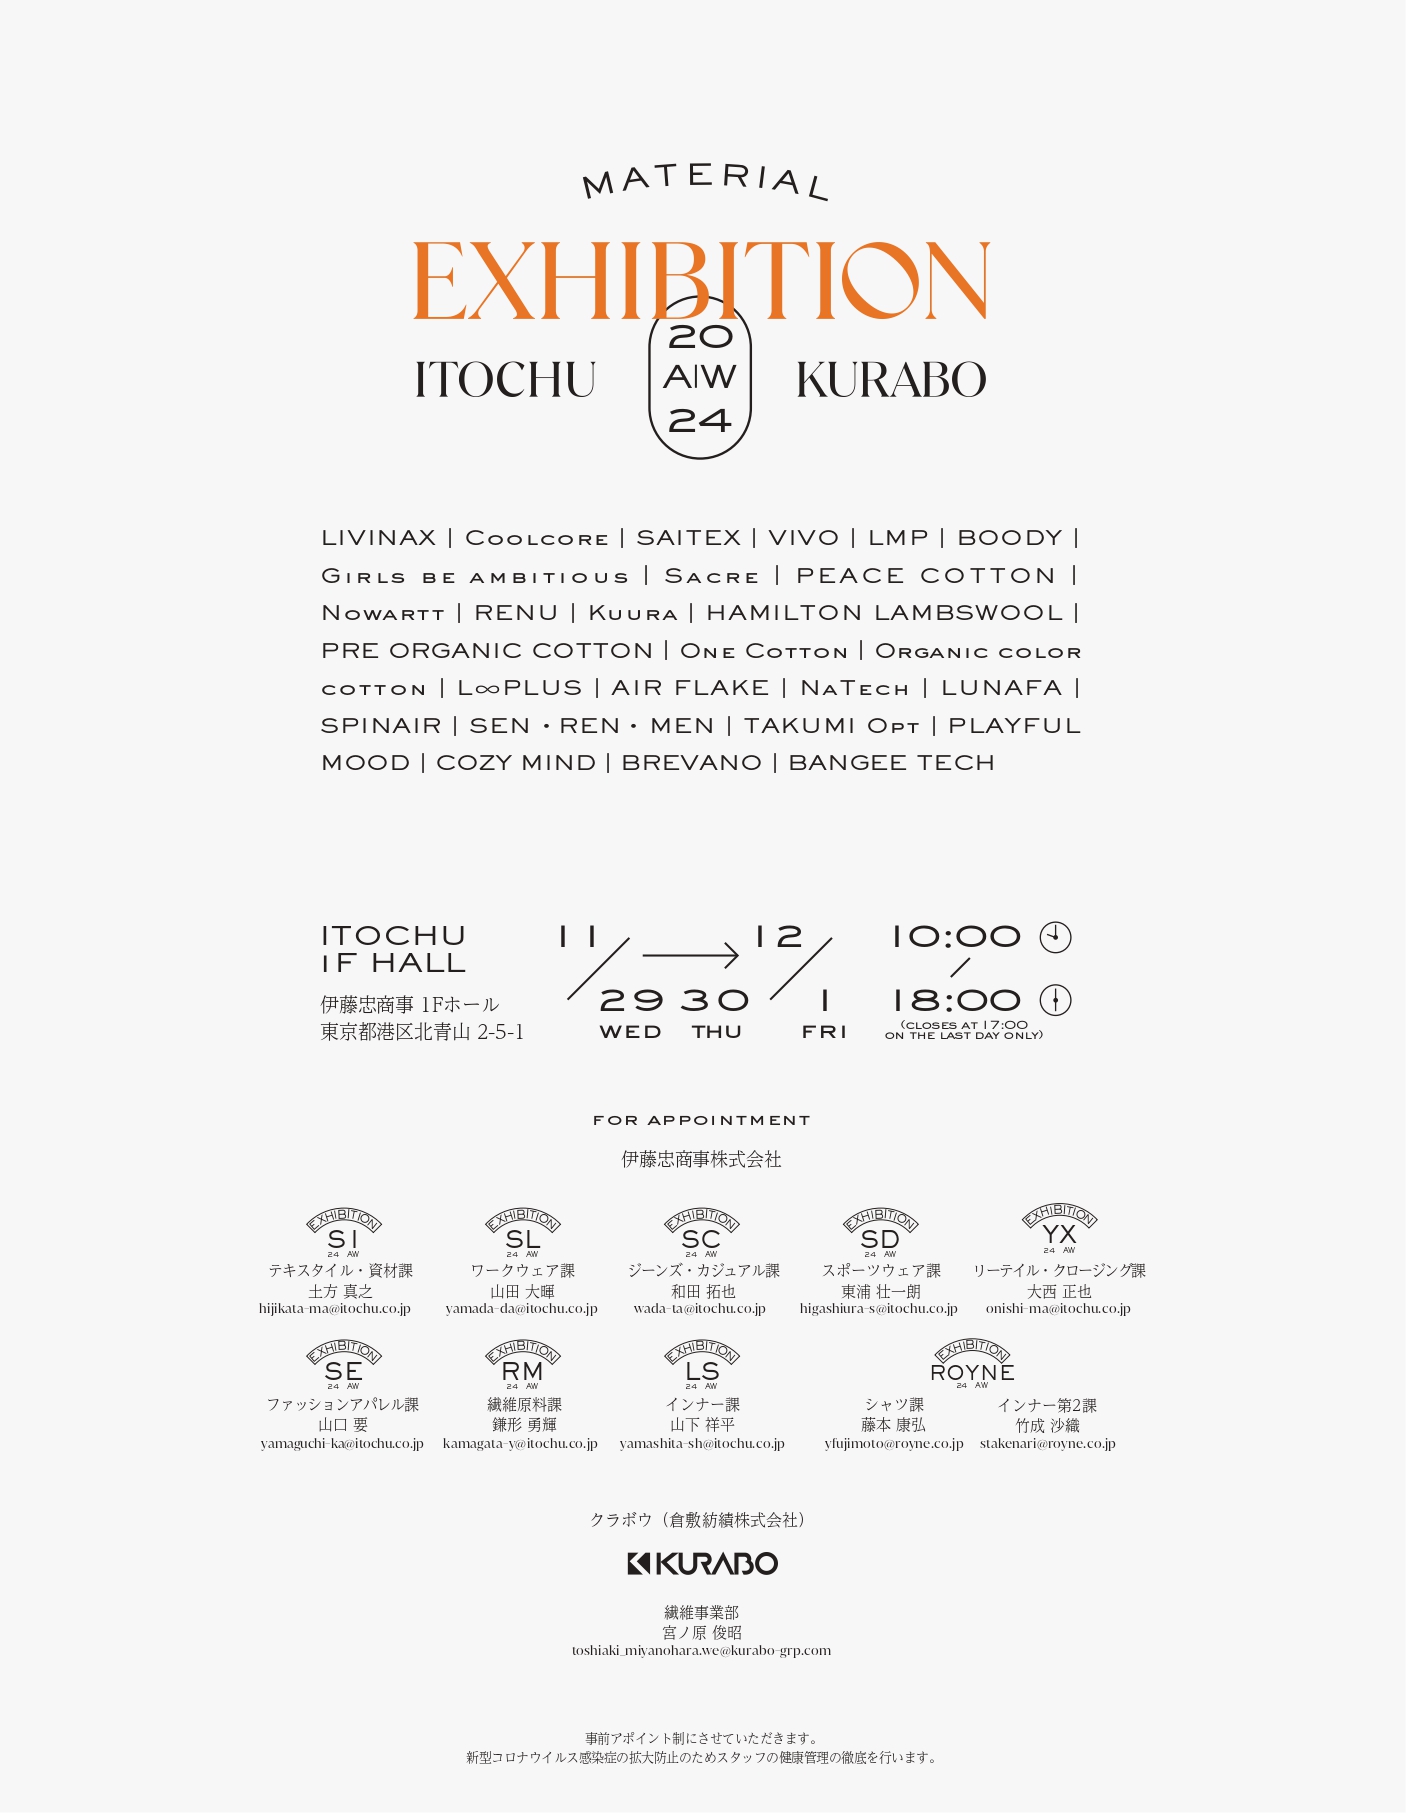 ITOCHU x KURABO Material Exhibition 開催のご案内　11月29日(水)~12月1日(金)@東京本社1F